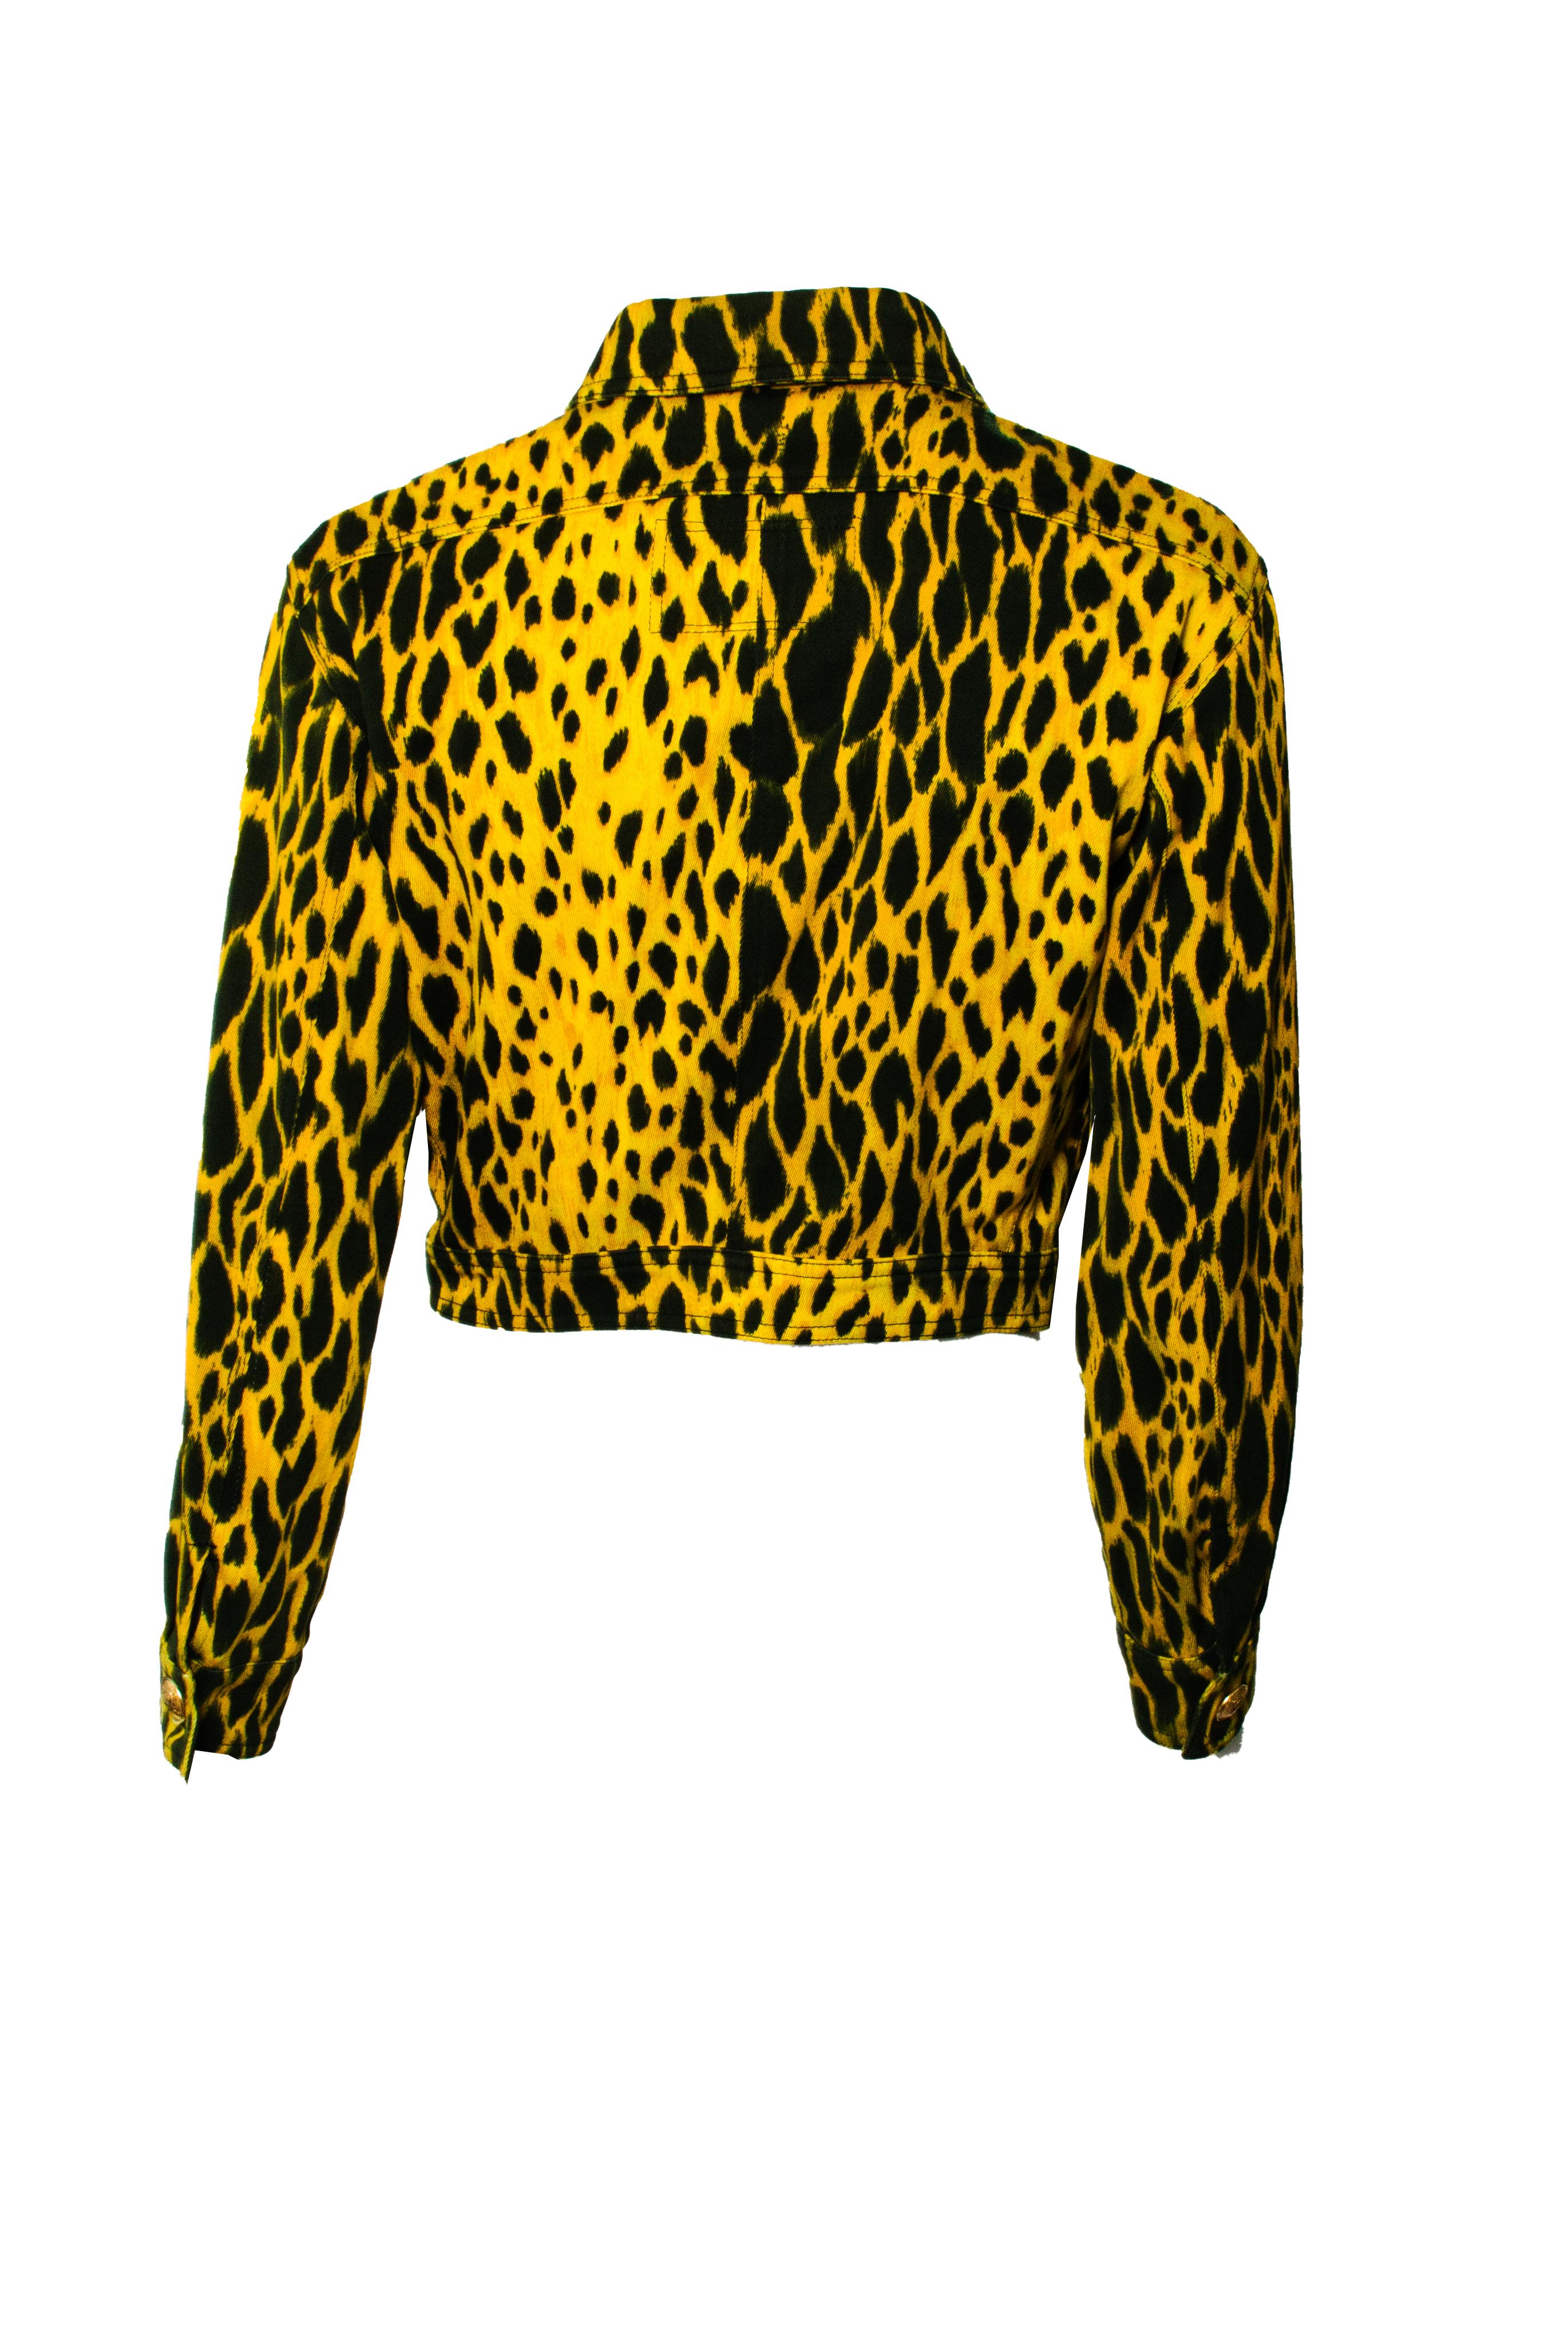 Brown S/S 1992 Gianni Versace Leopard Printed Denim Jacket 